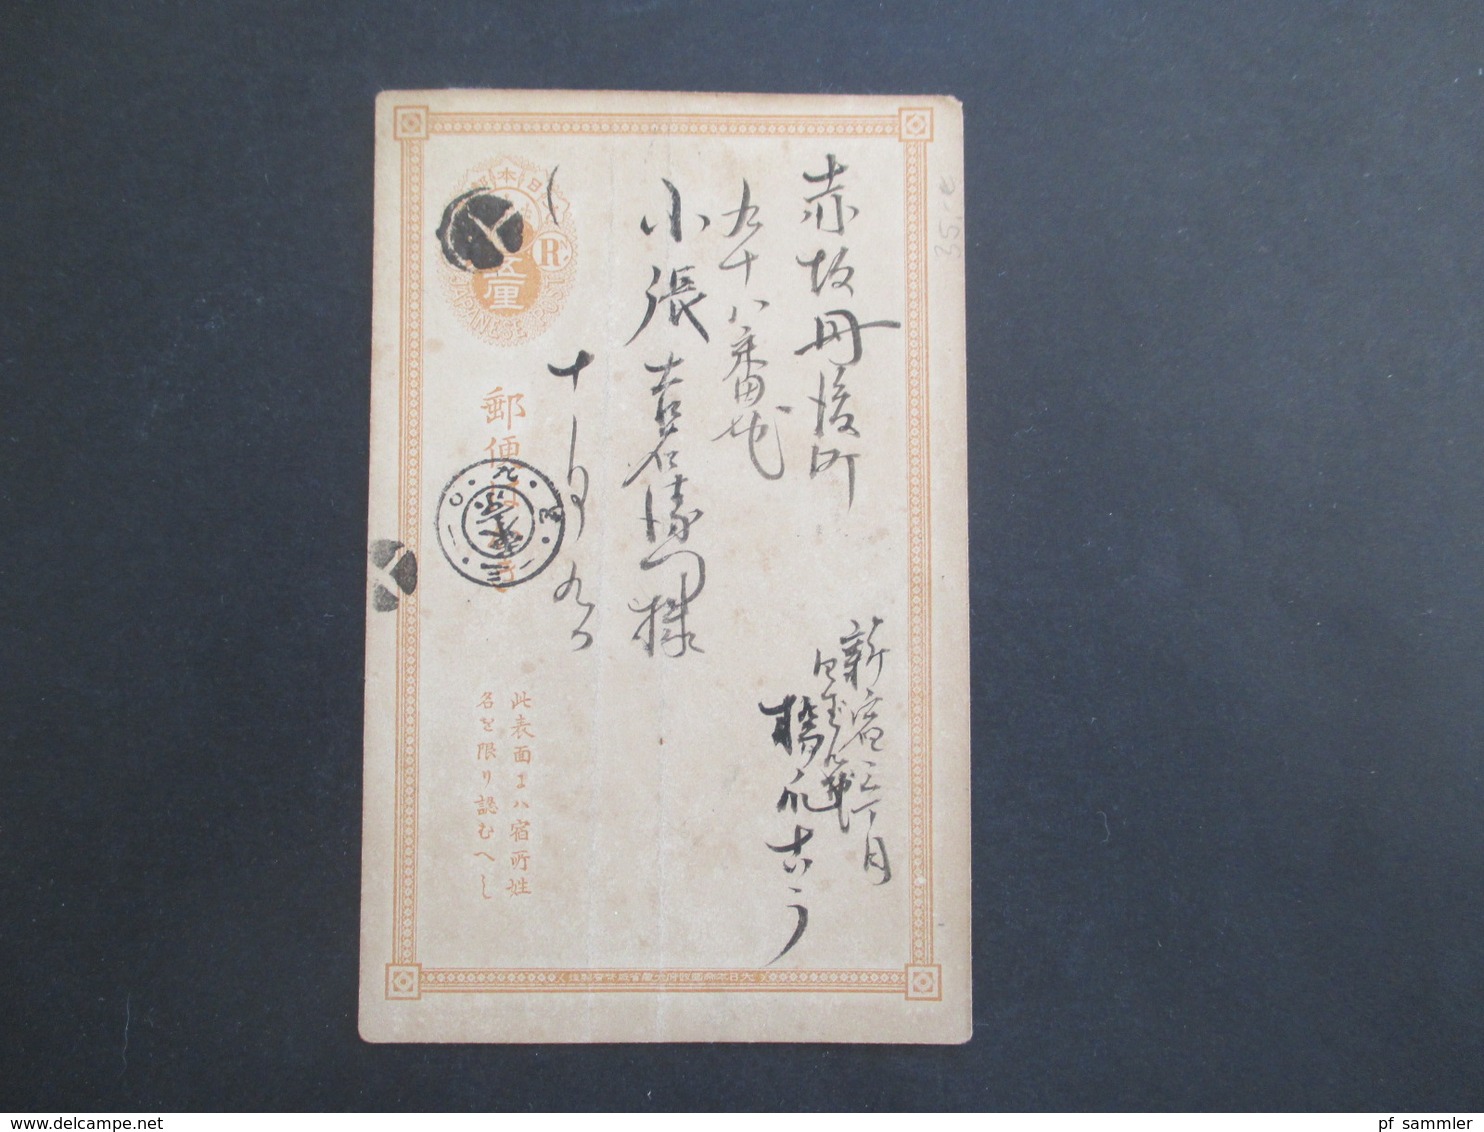 Japan Alte Ganzsache 3 Stempel Japanese Post - Storia Postale